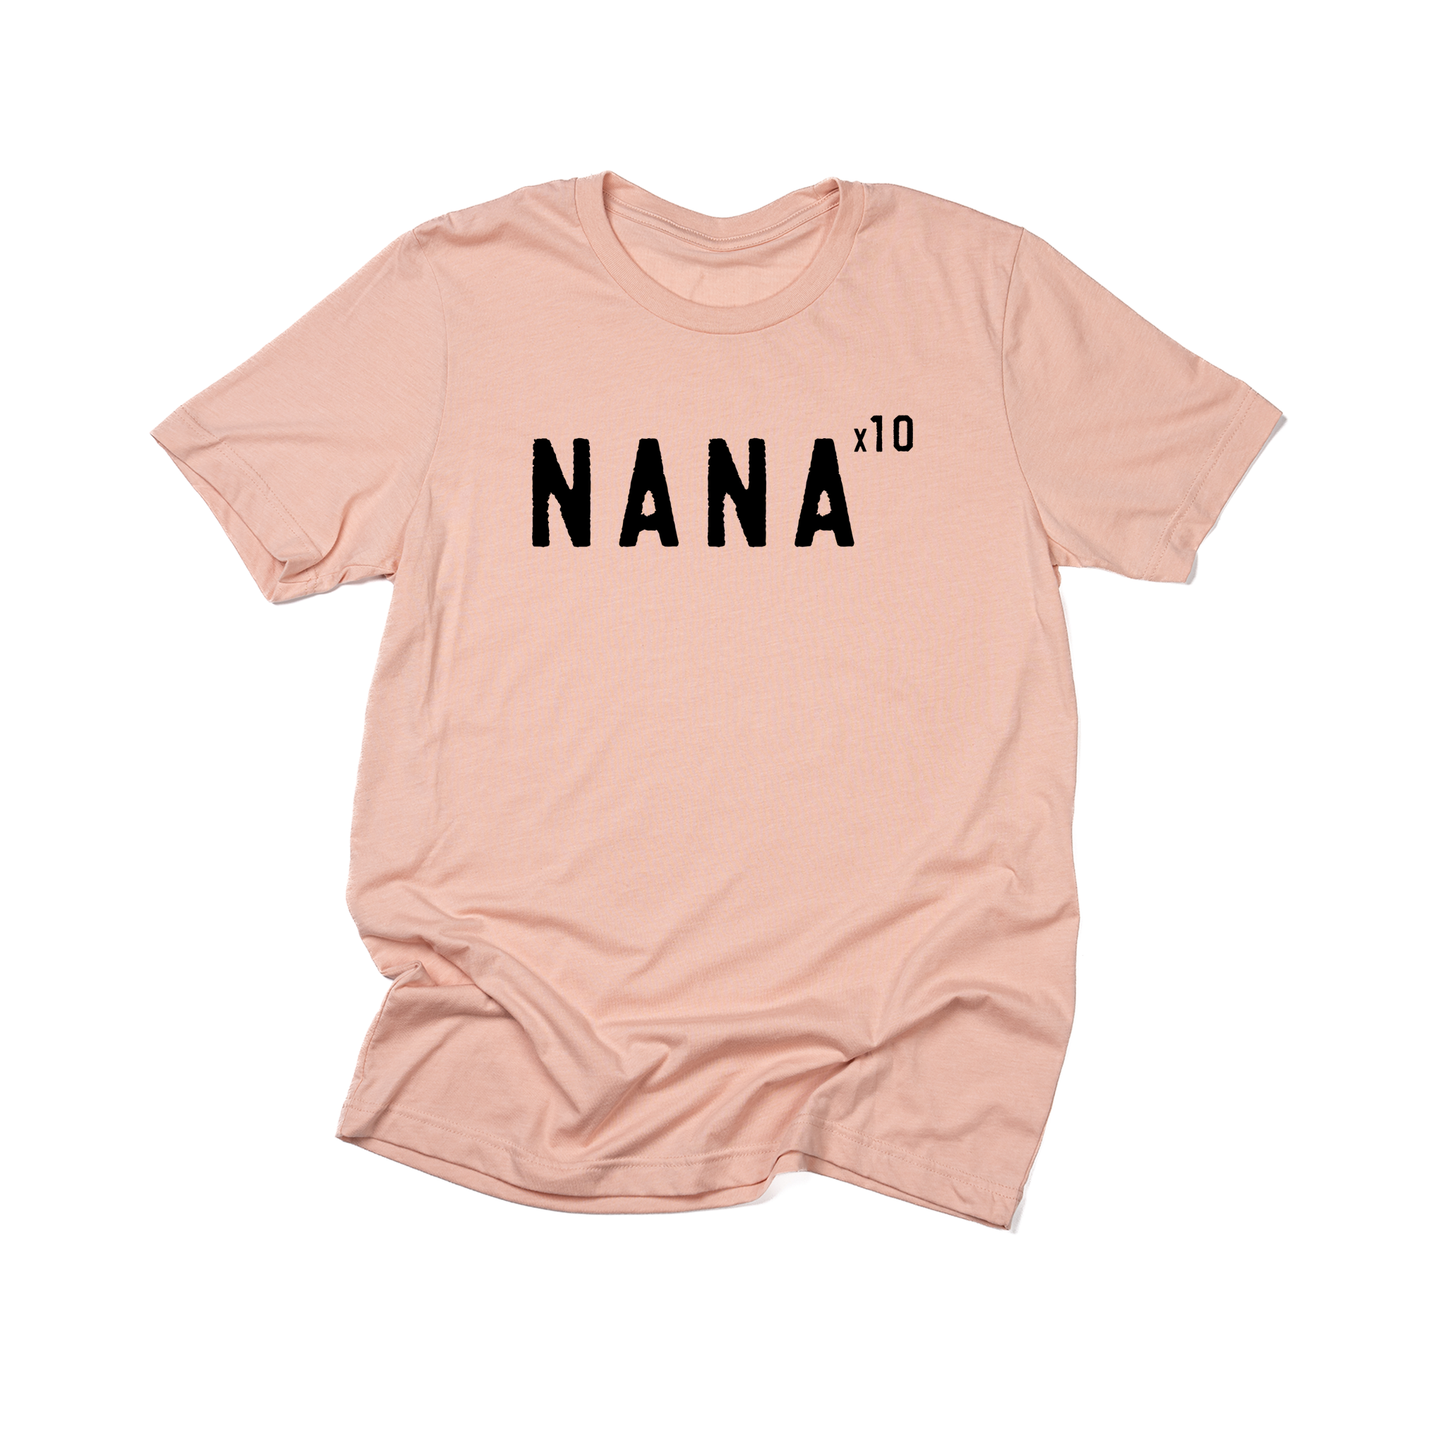 Nana x10 (Customizable, Black) - Tee (Peach)